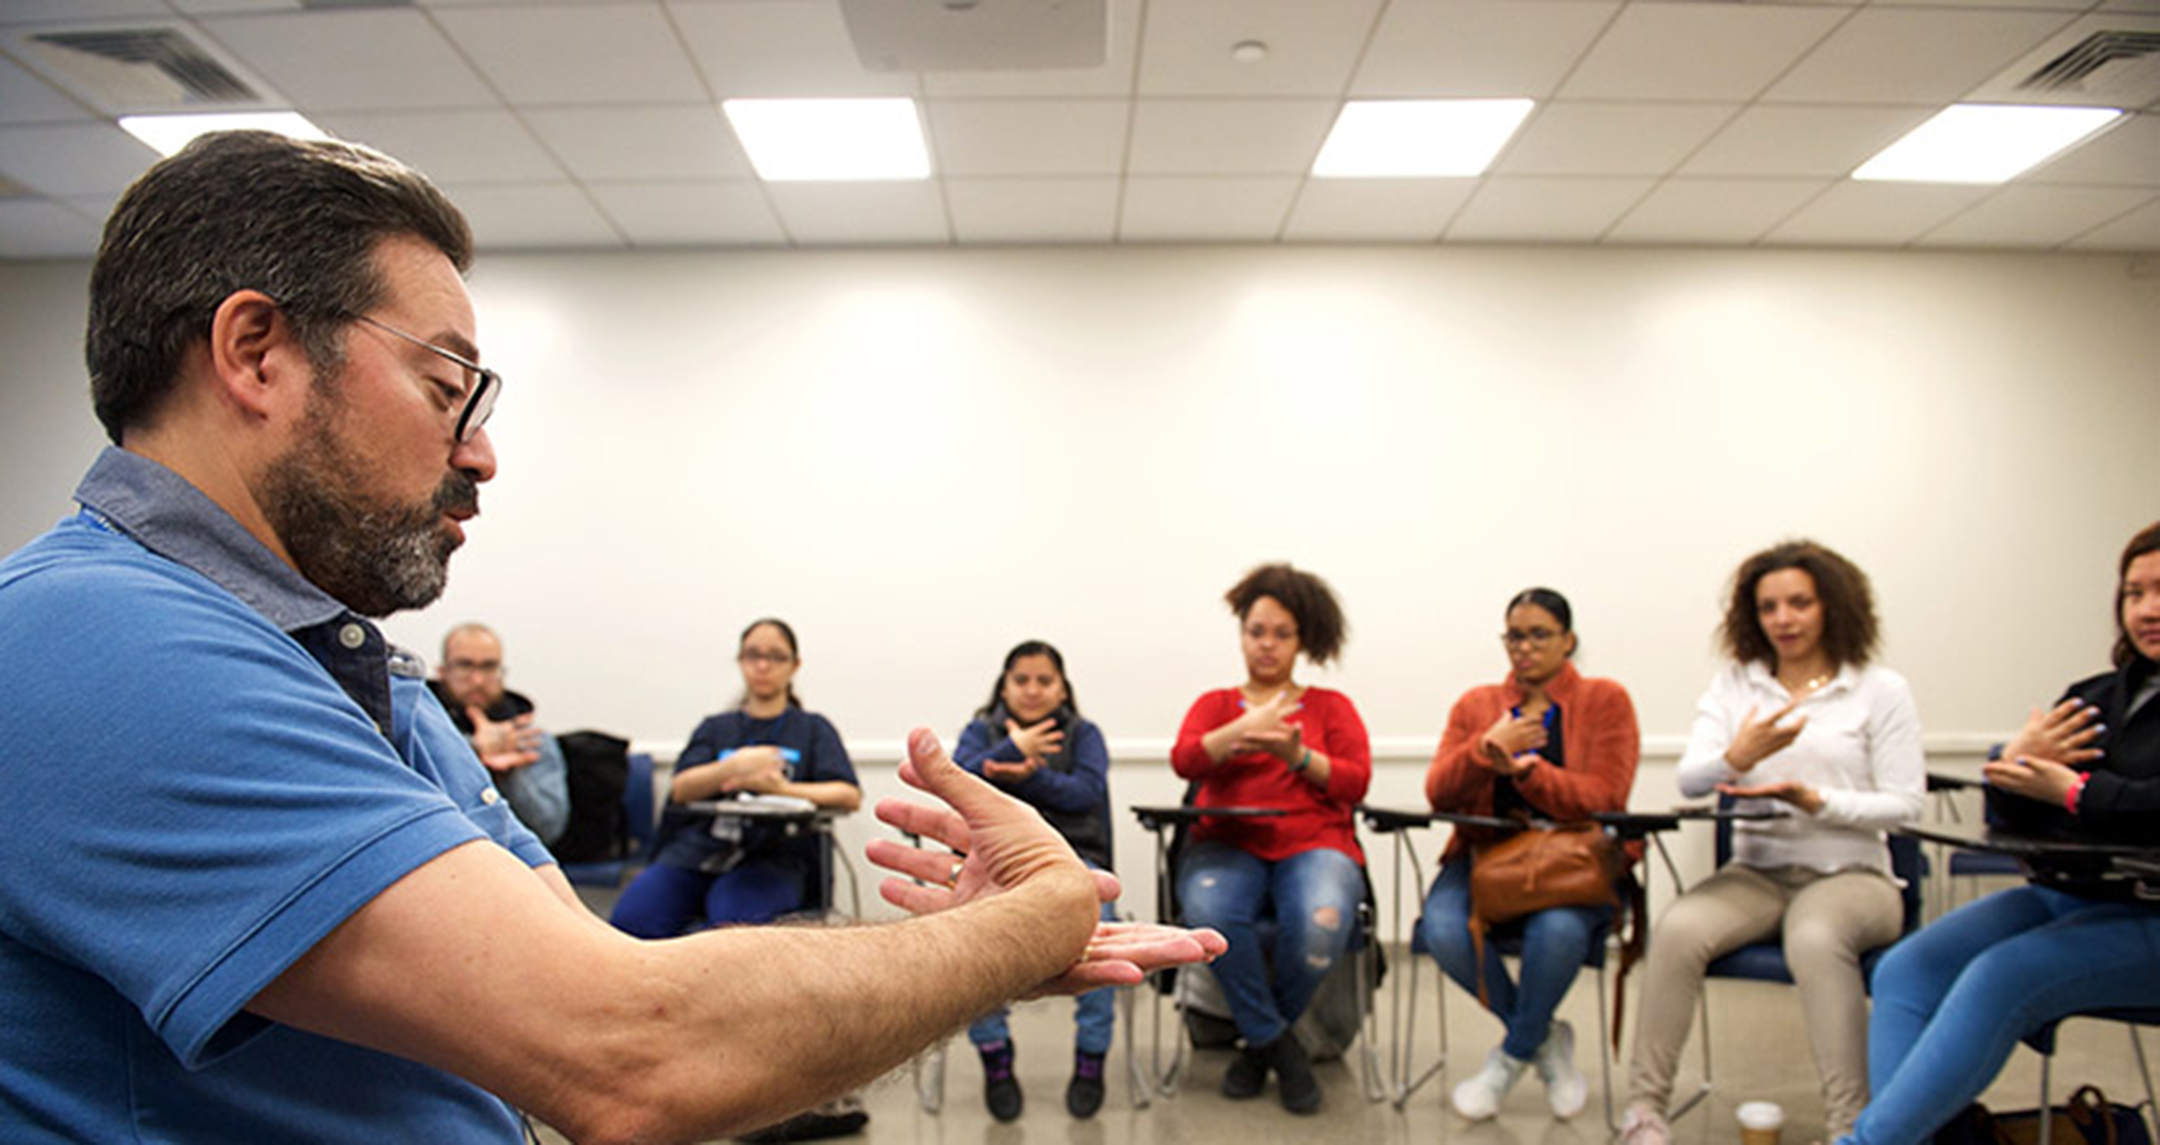 Teacher leading a sign language class